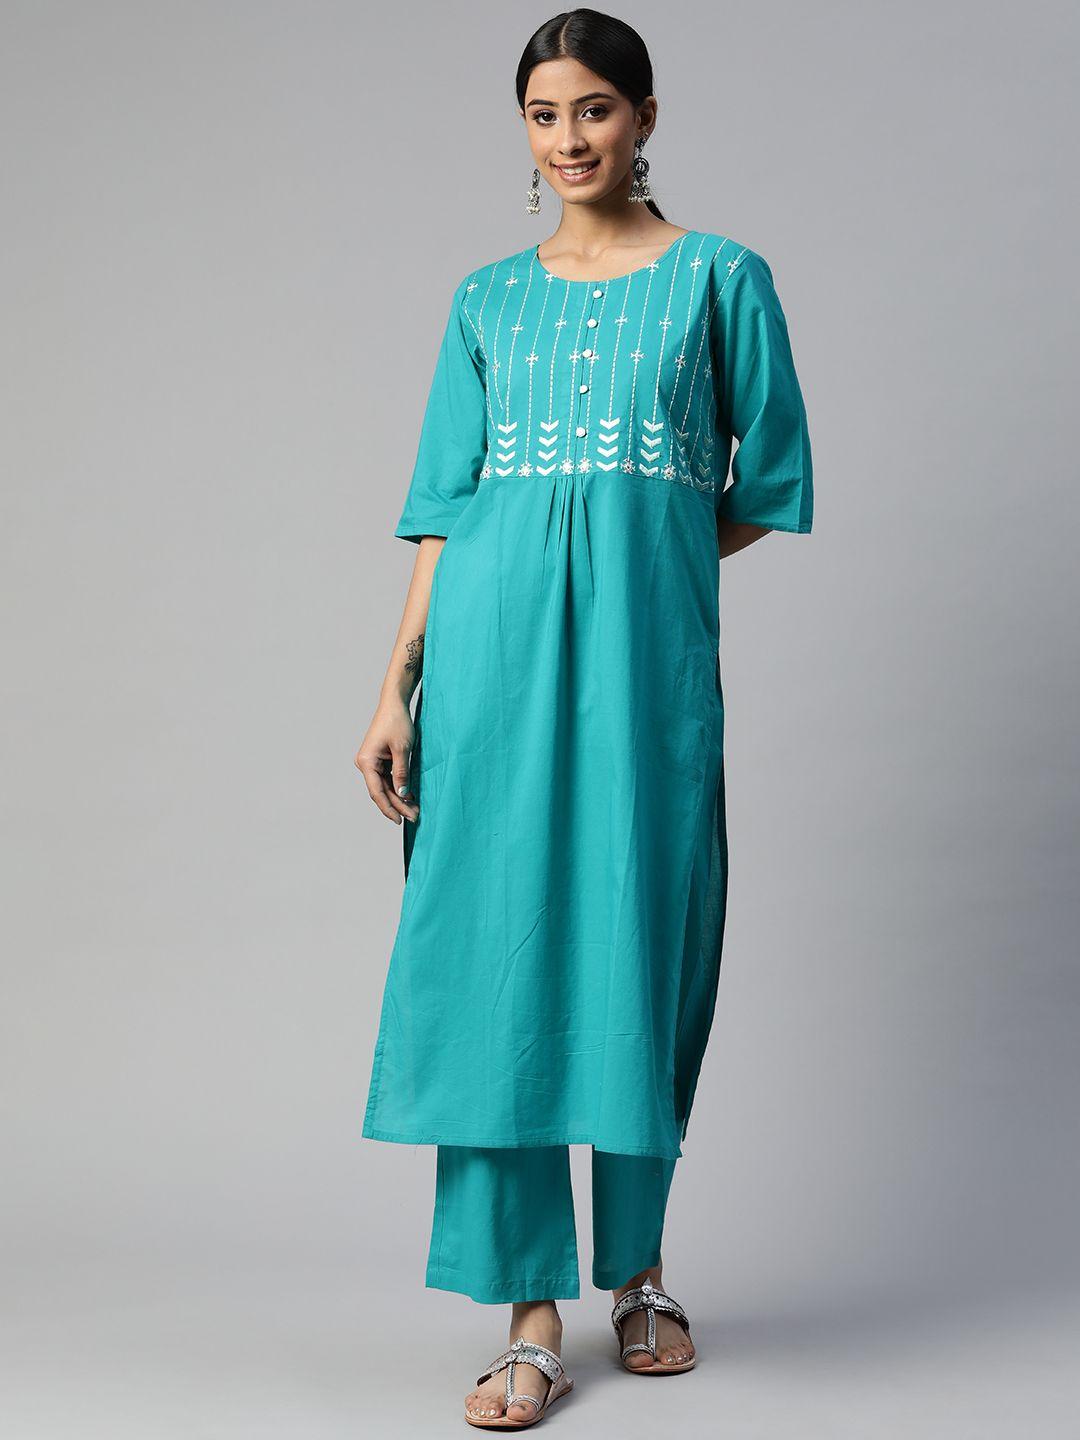 svarchi-women-turquoise-blue-ethnic-motifs-embroidered-empire-thread-work-pure-cotton-kurta-with-palazzos